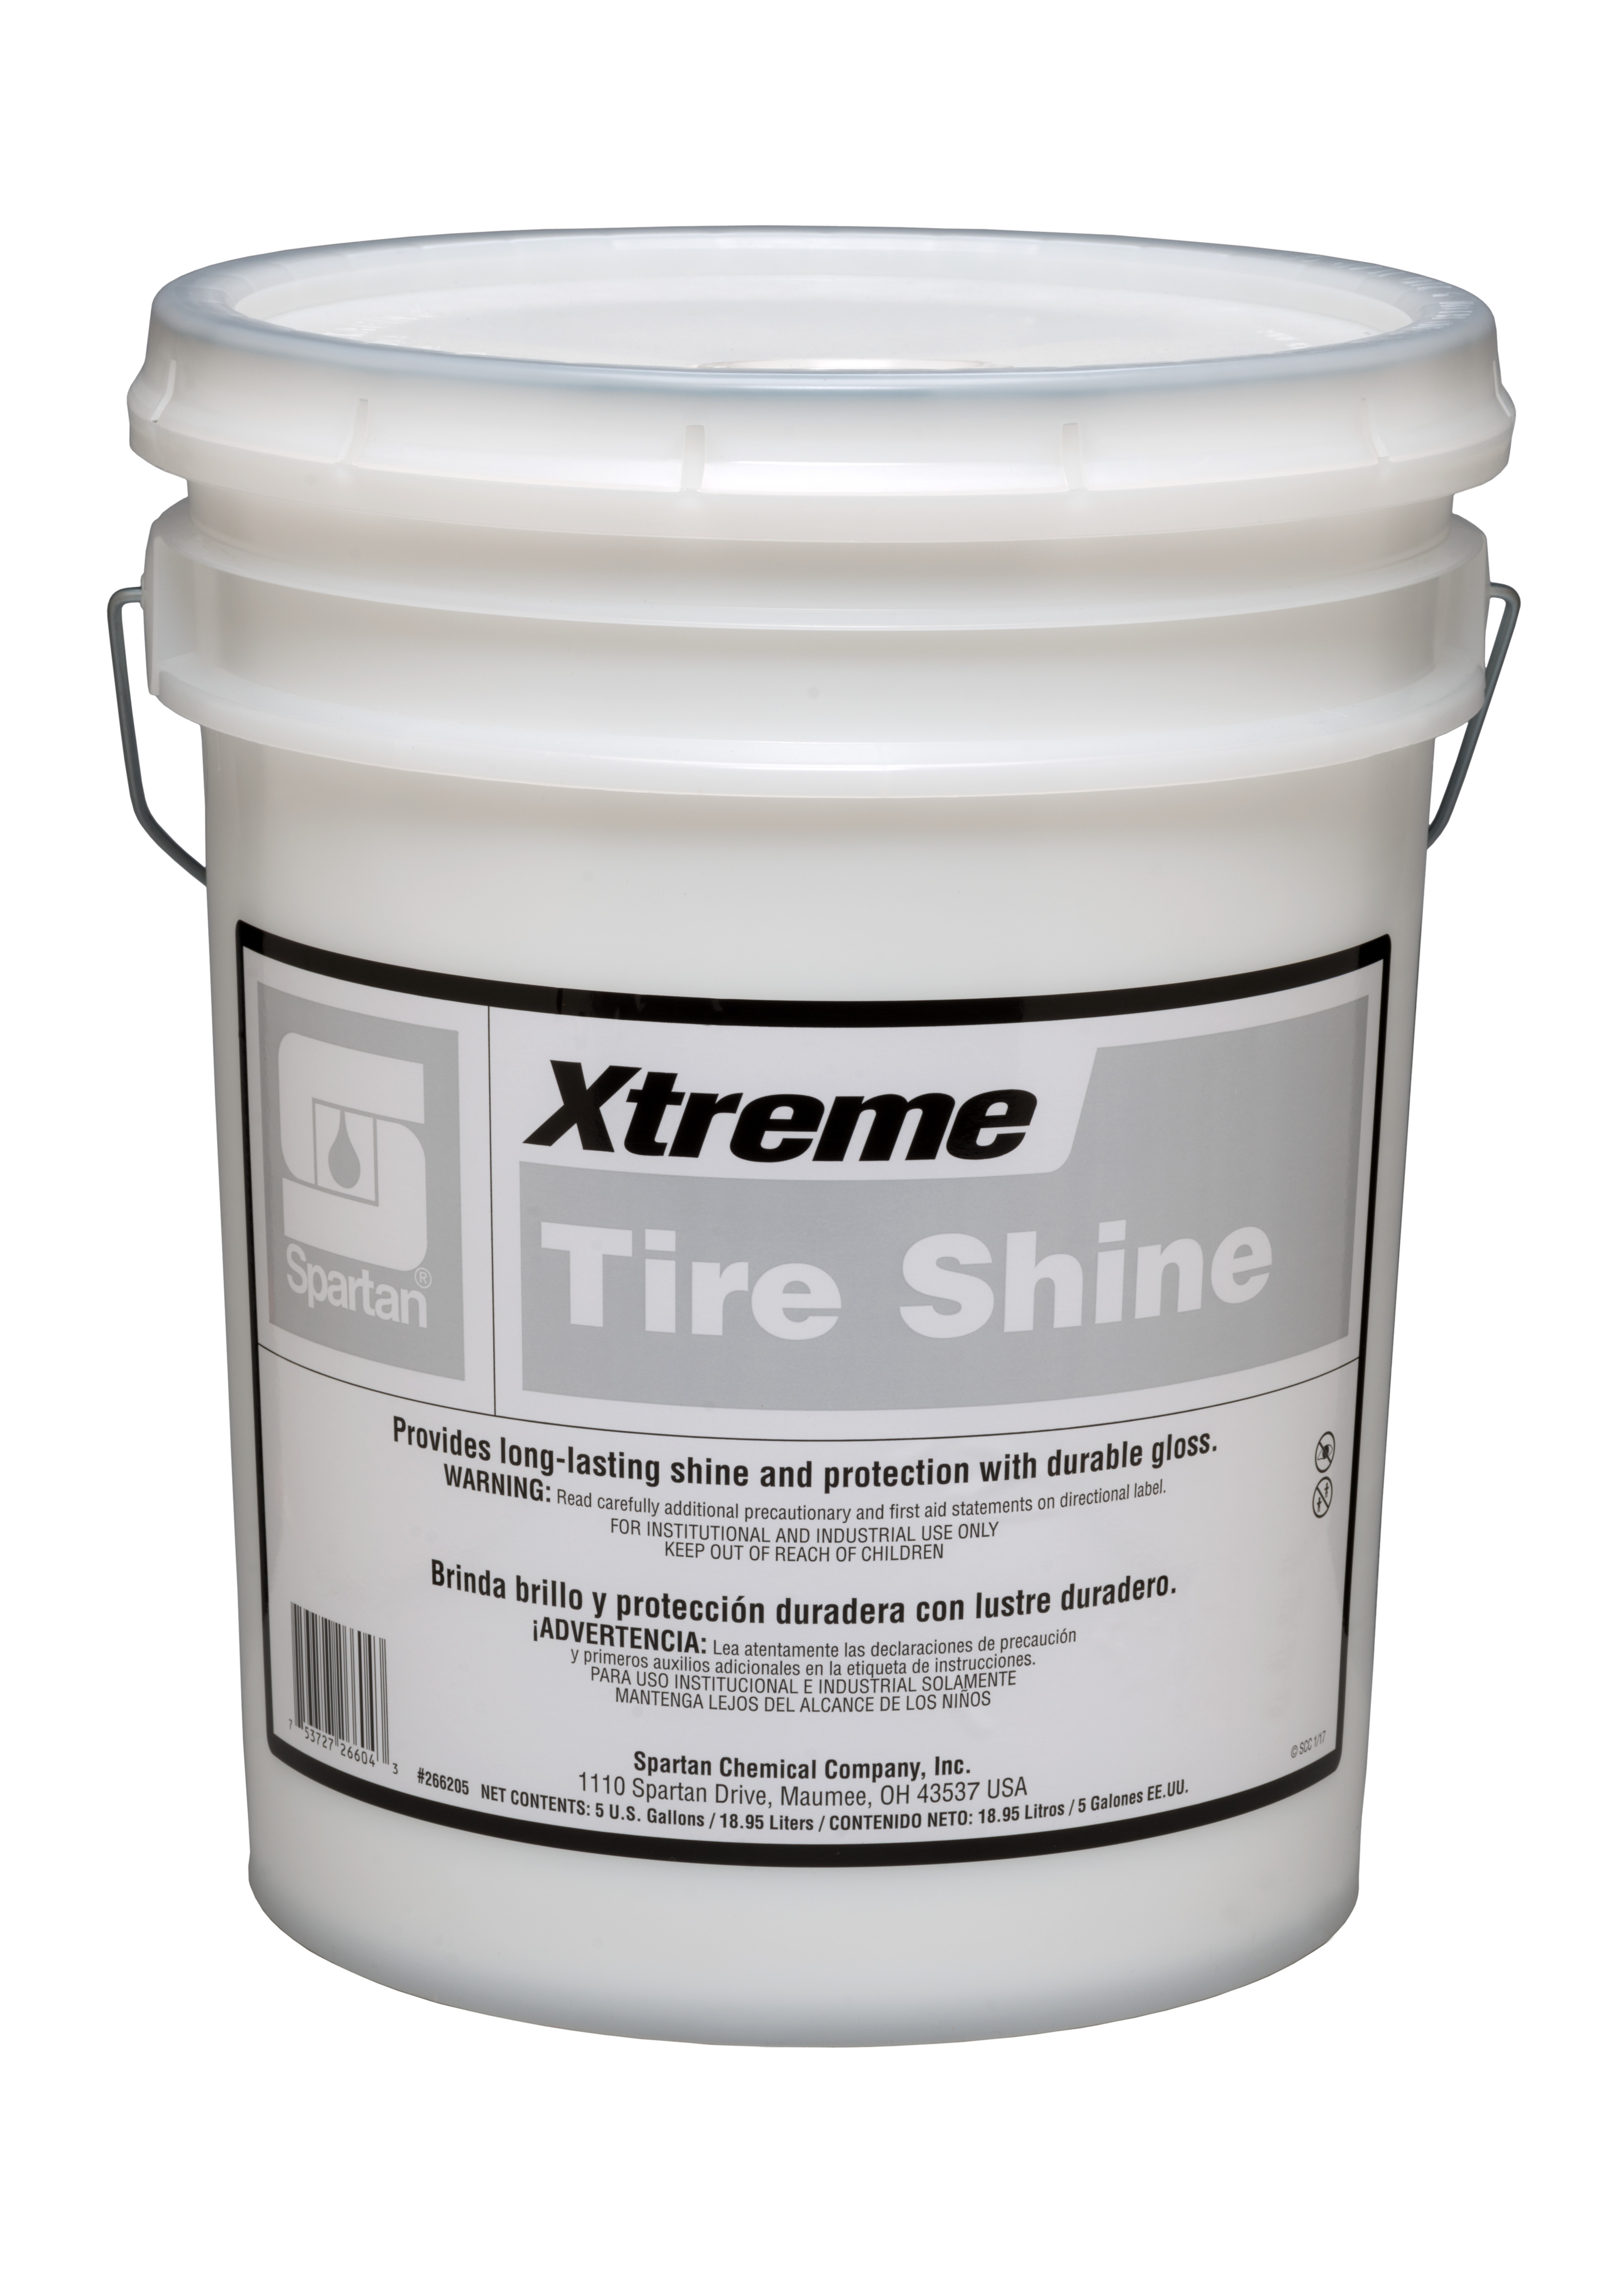 Spartan Chemical Company Xtreme Tire Shine, 5 GAL PAIL